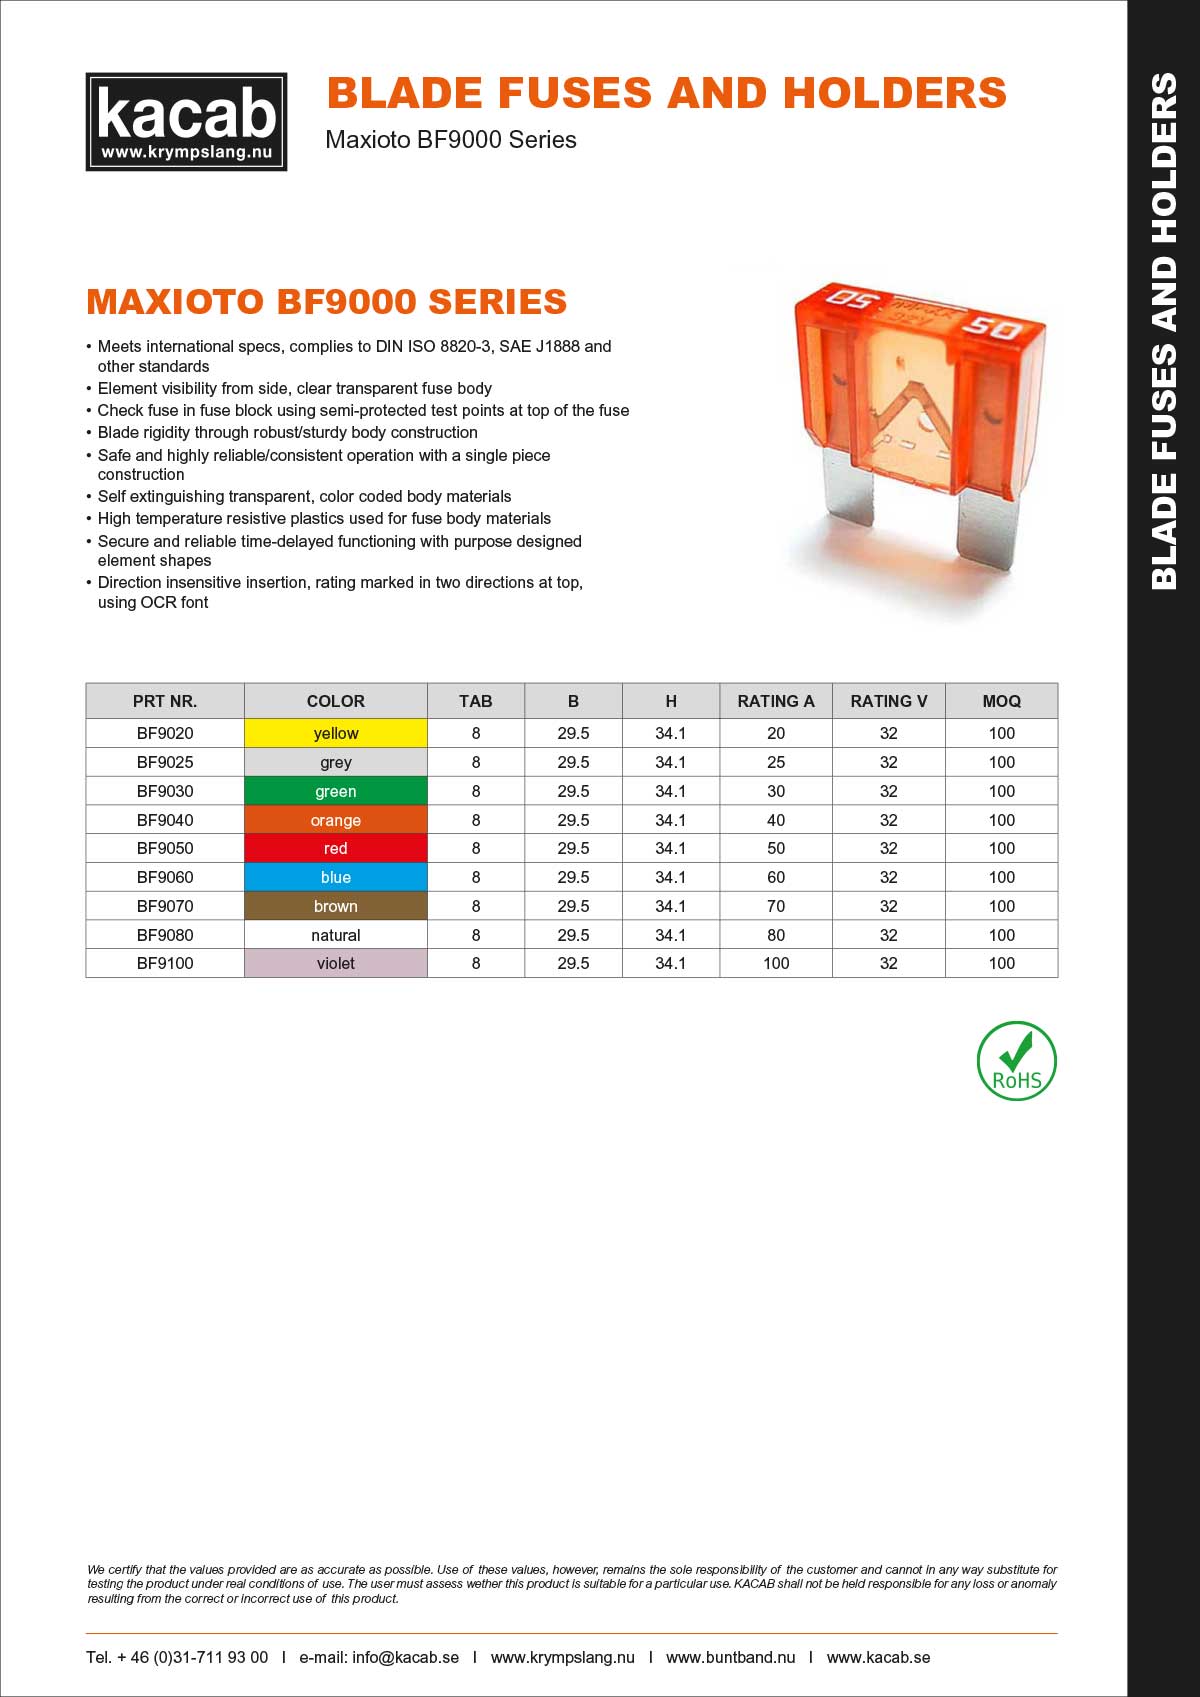 KACAB Maxioto BF9000 Series